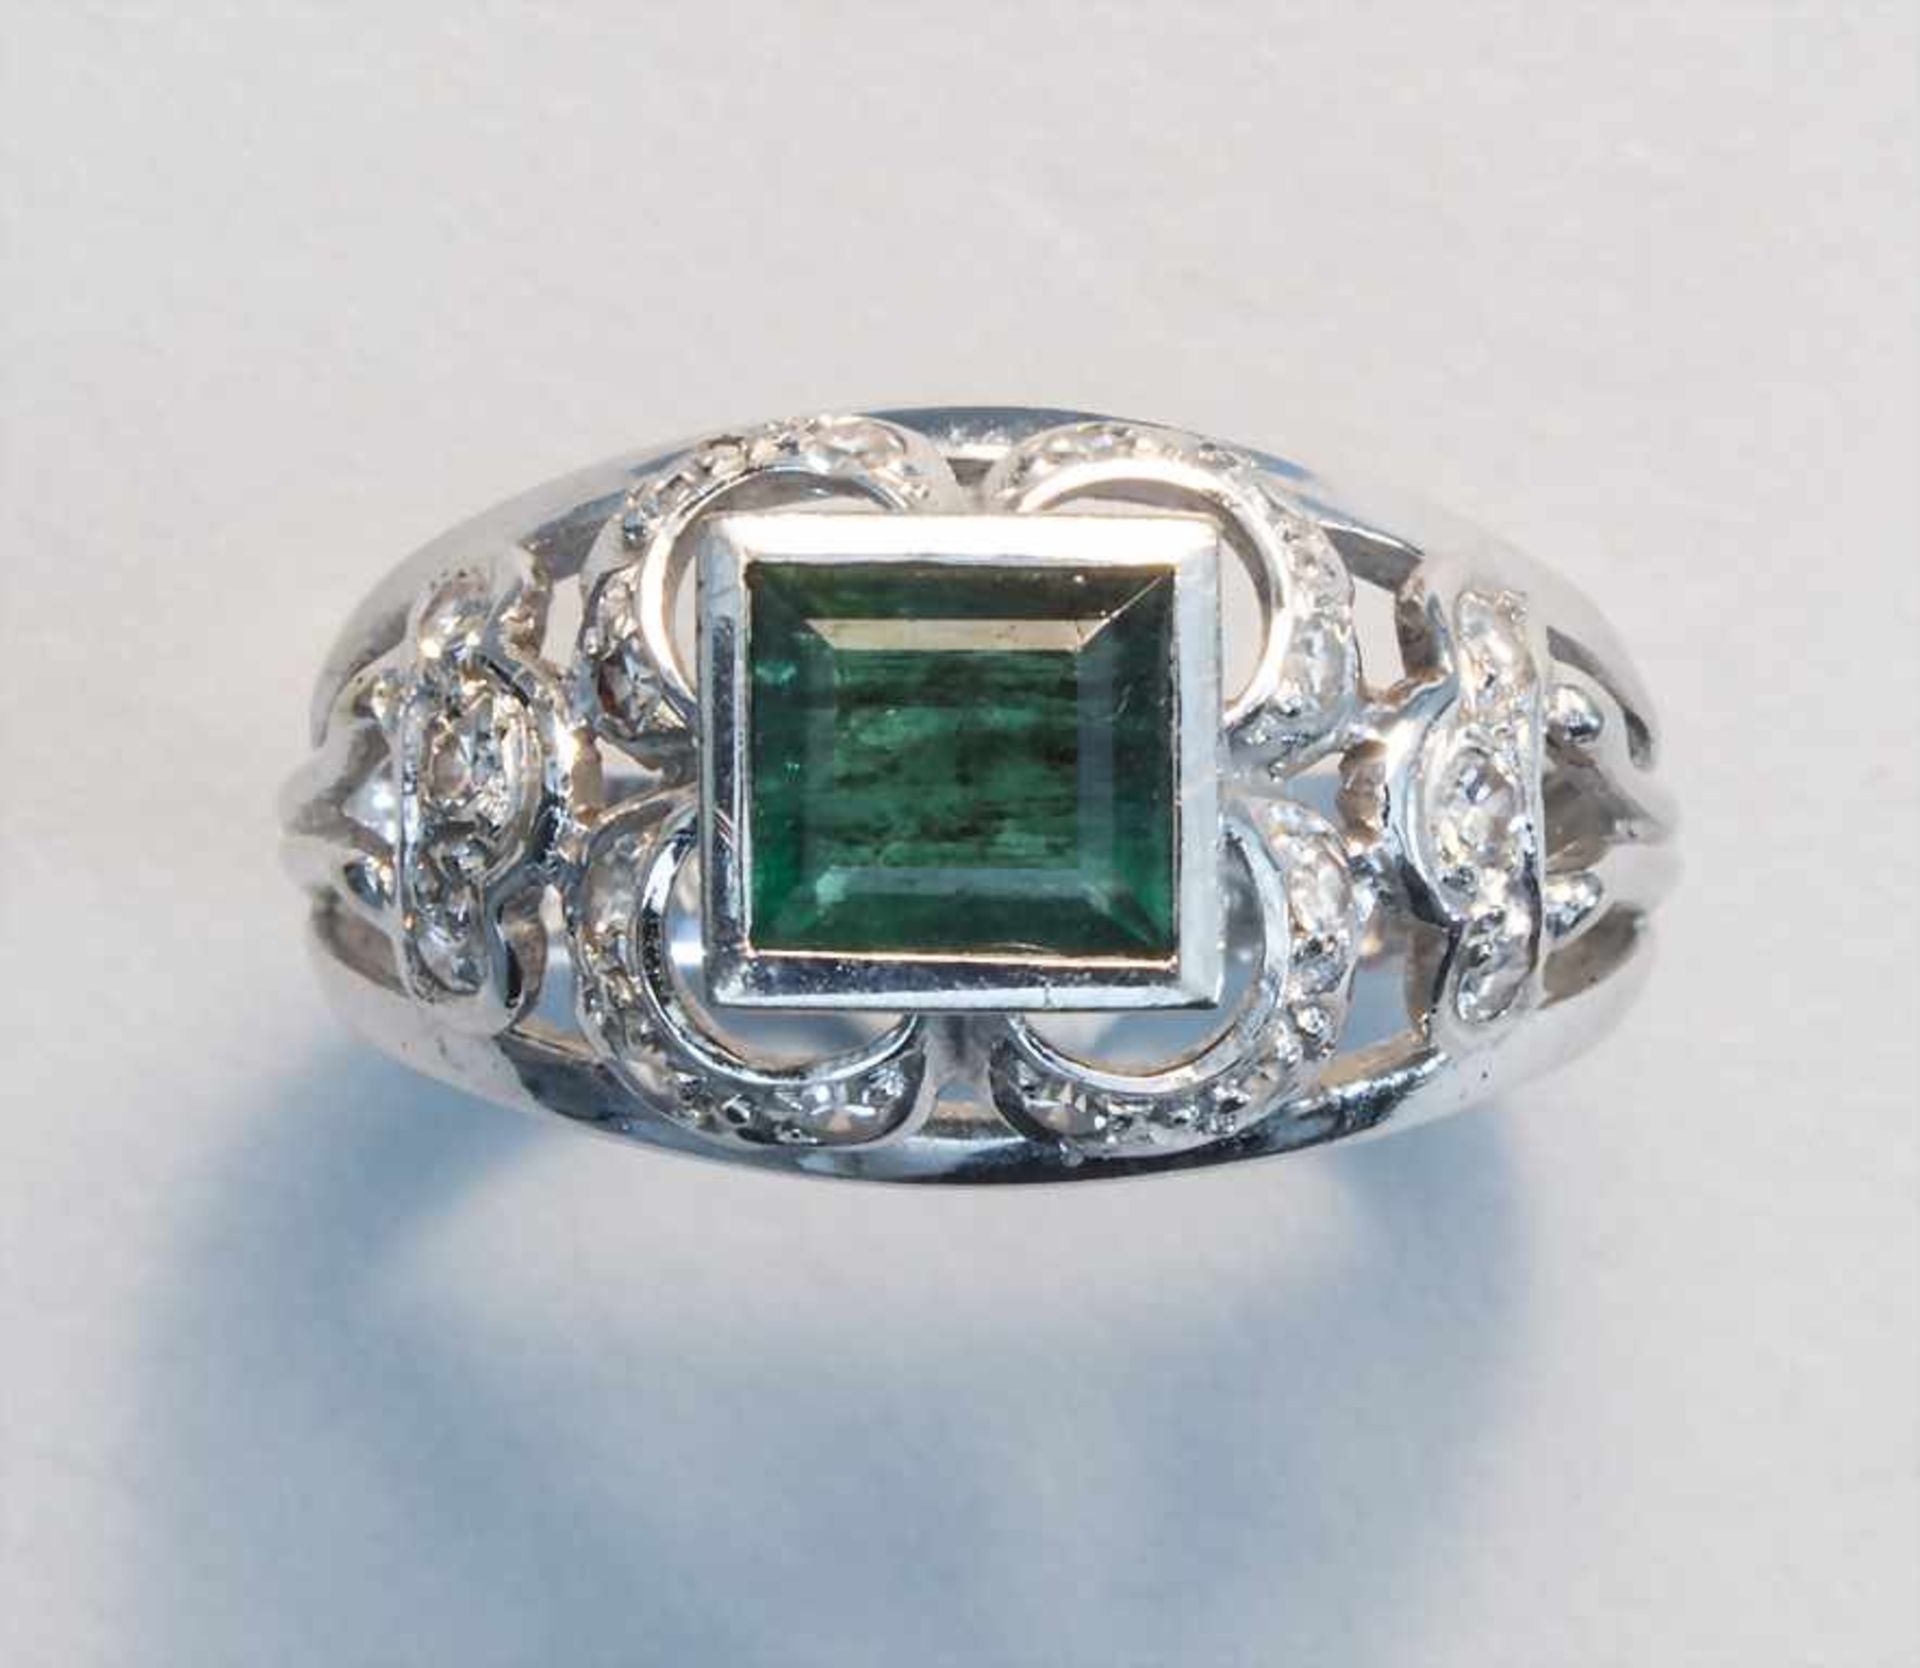 Damenring mit grünem Turmalin und Diamanten / A ladies ring with a green tourmaline and